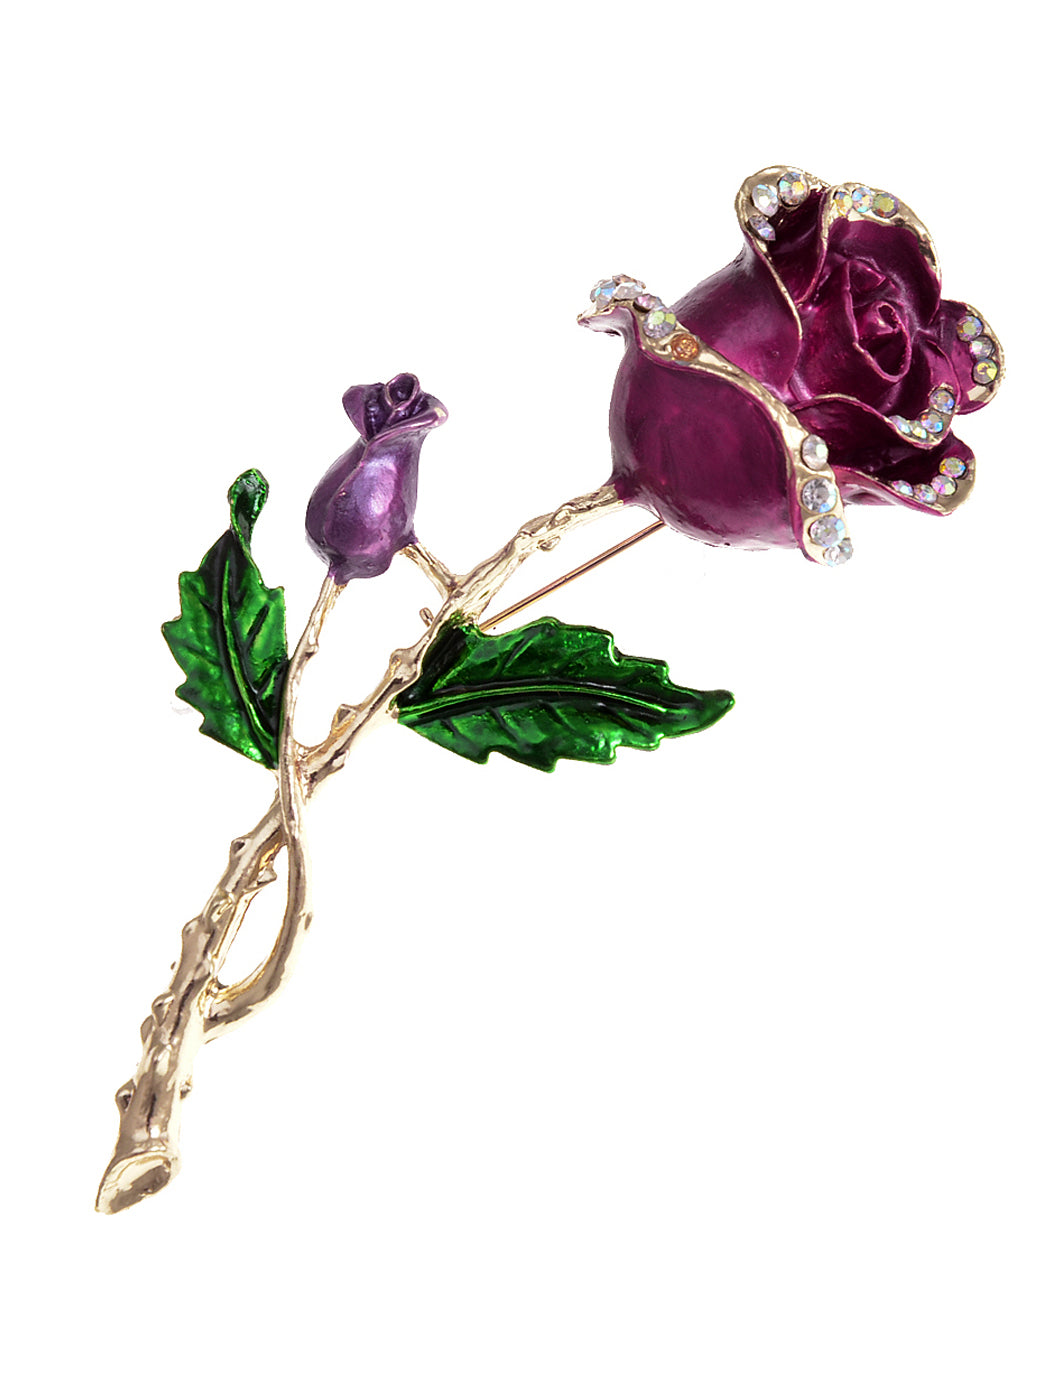 White Enamel Painted Rose Flower Pin Brooch